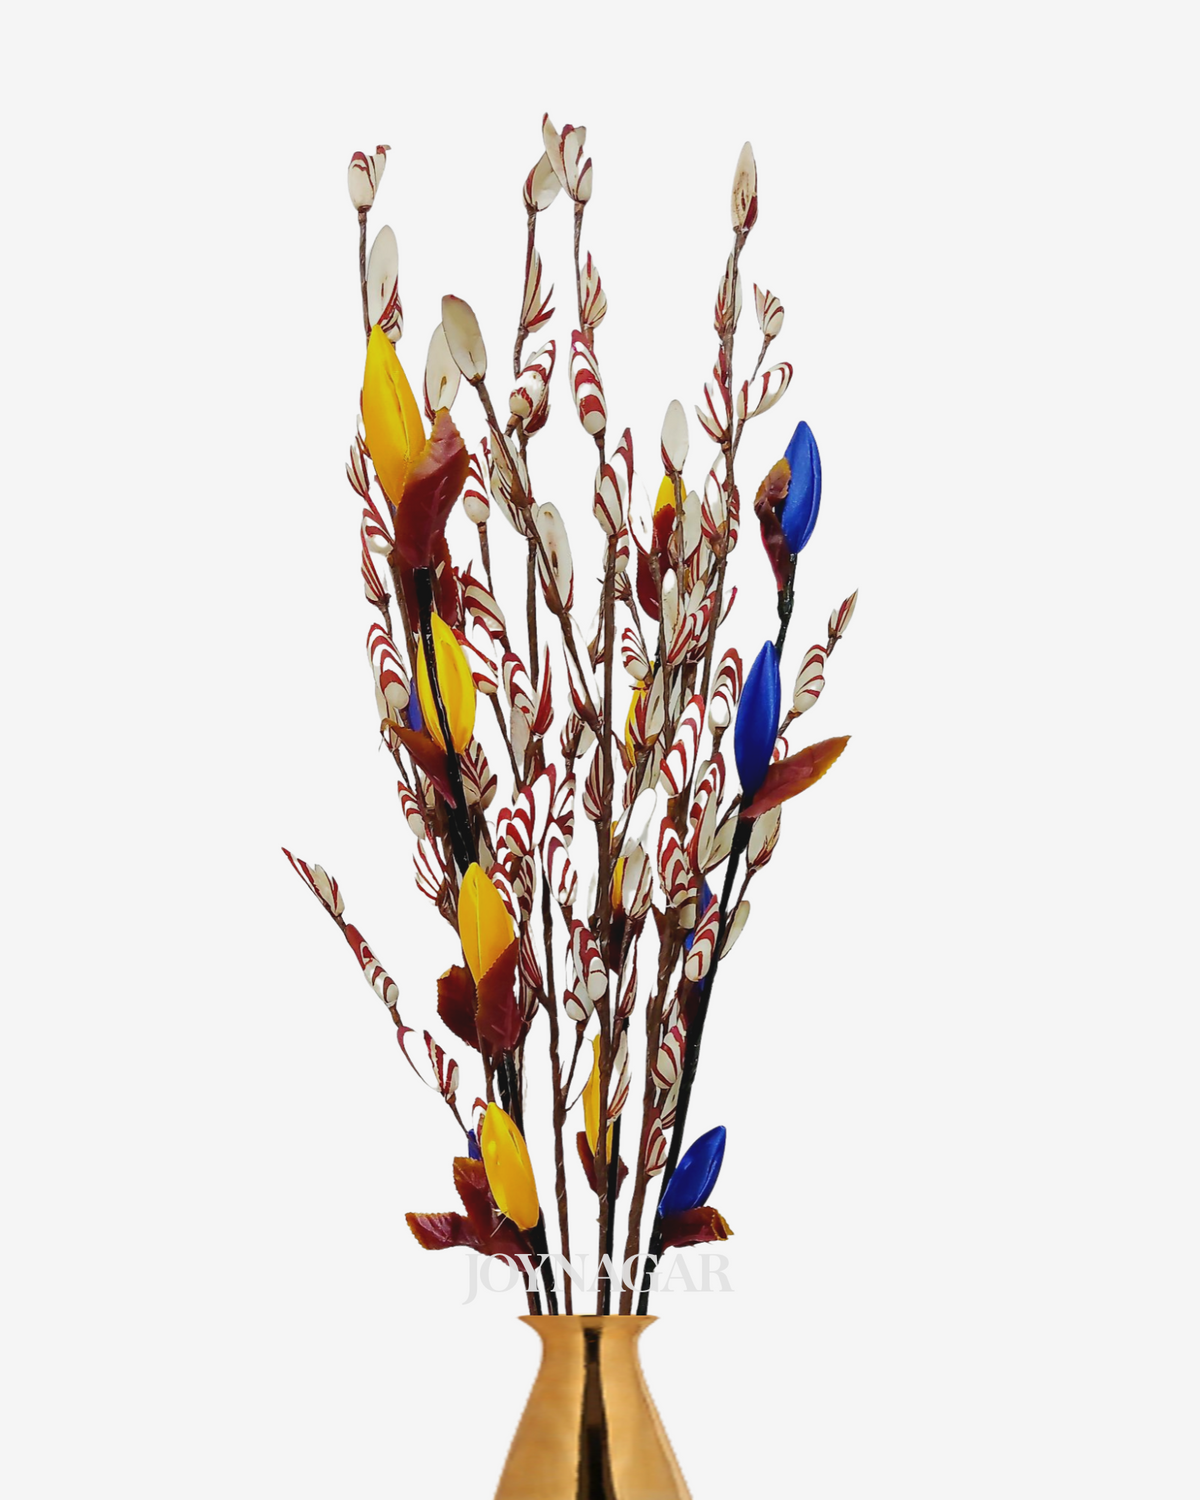 Sola Lotus Buds Imly Flower Bunch Joynagar Handicraft Artificial Flowers color_random